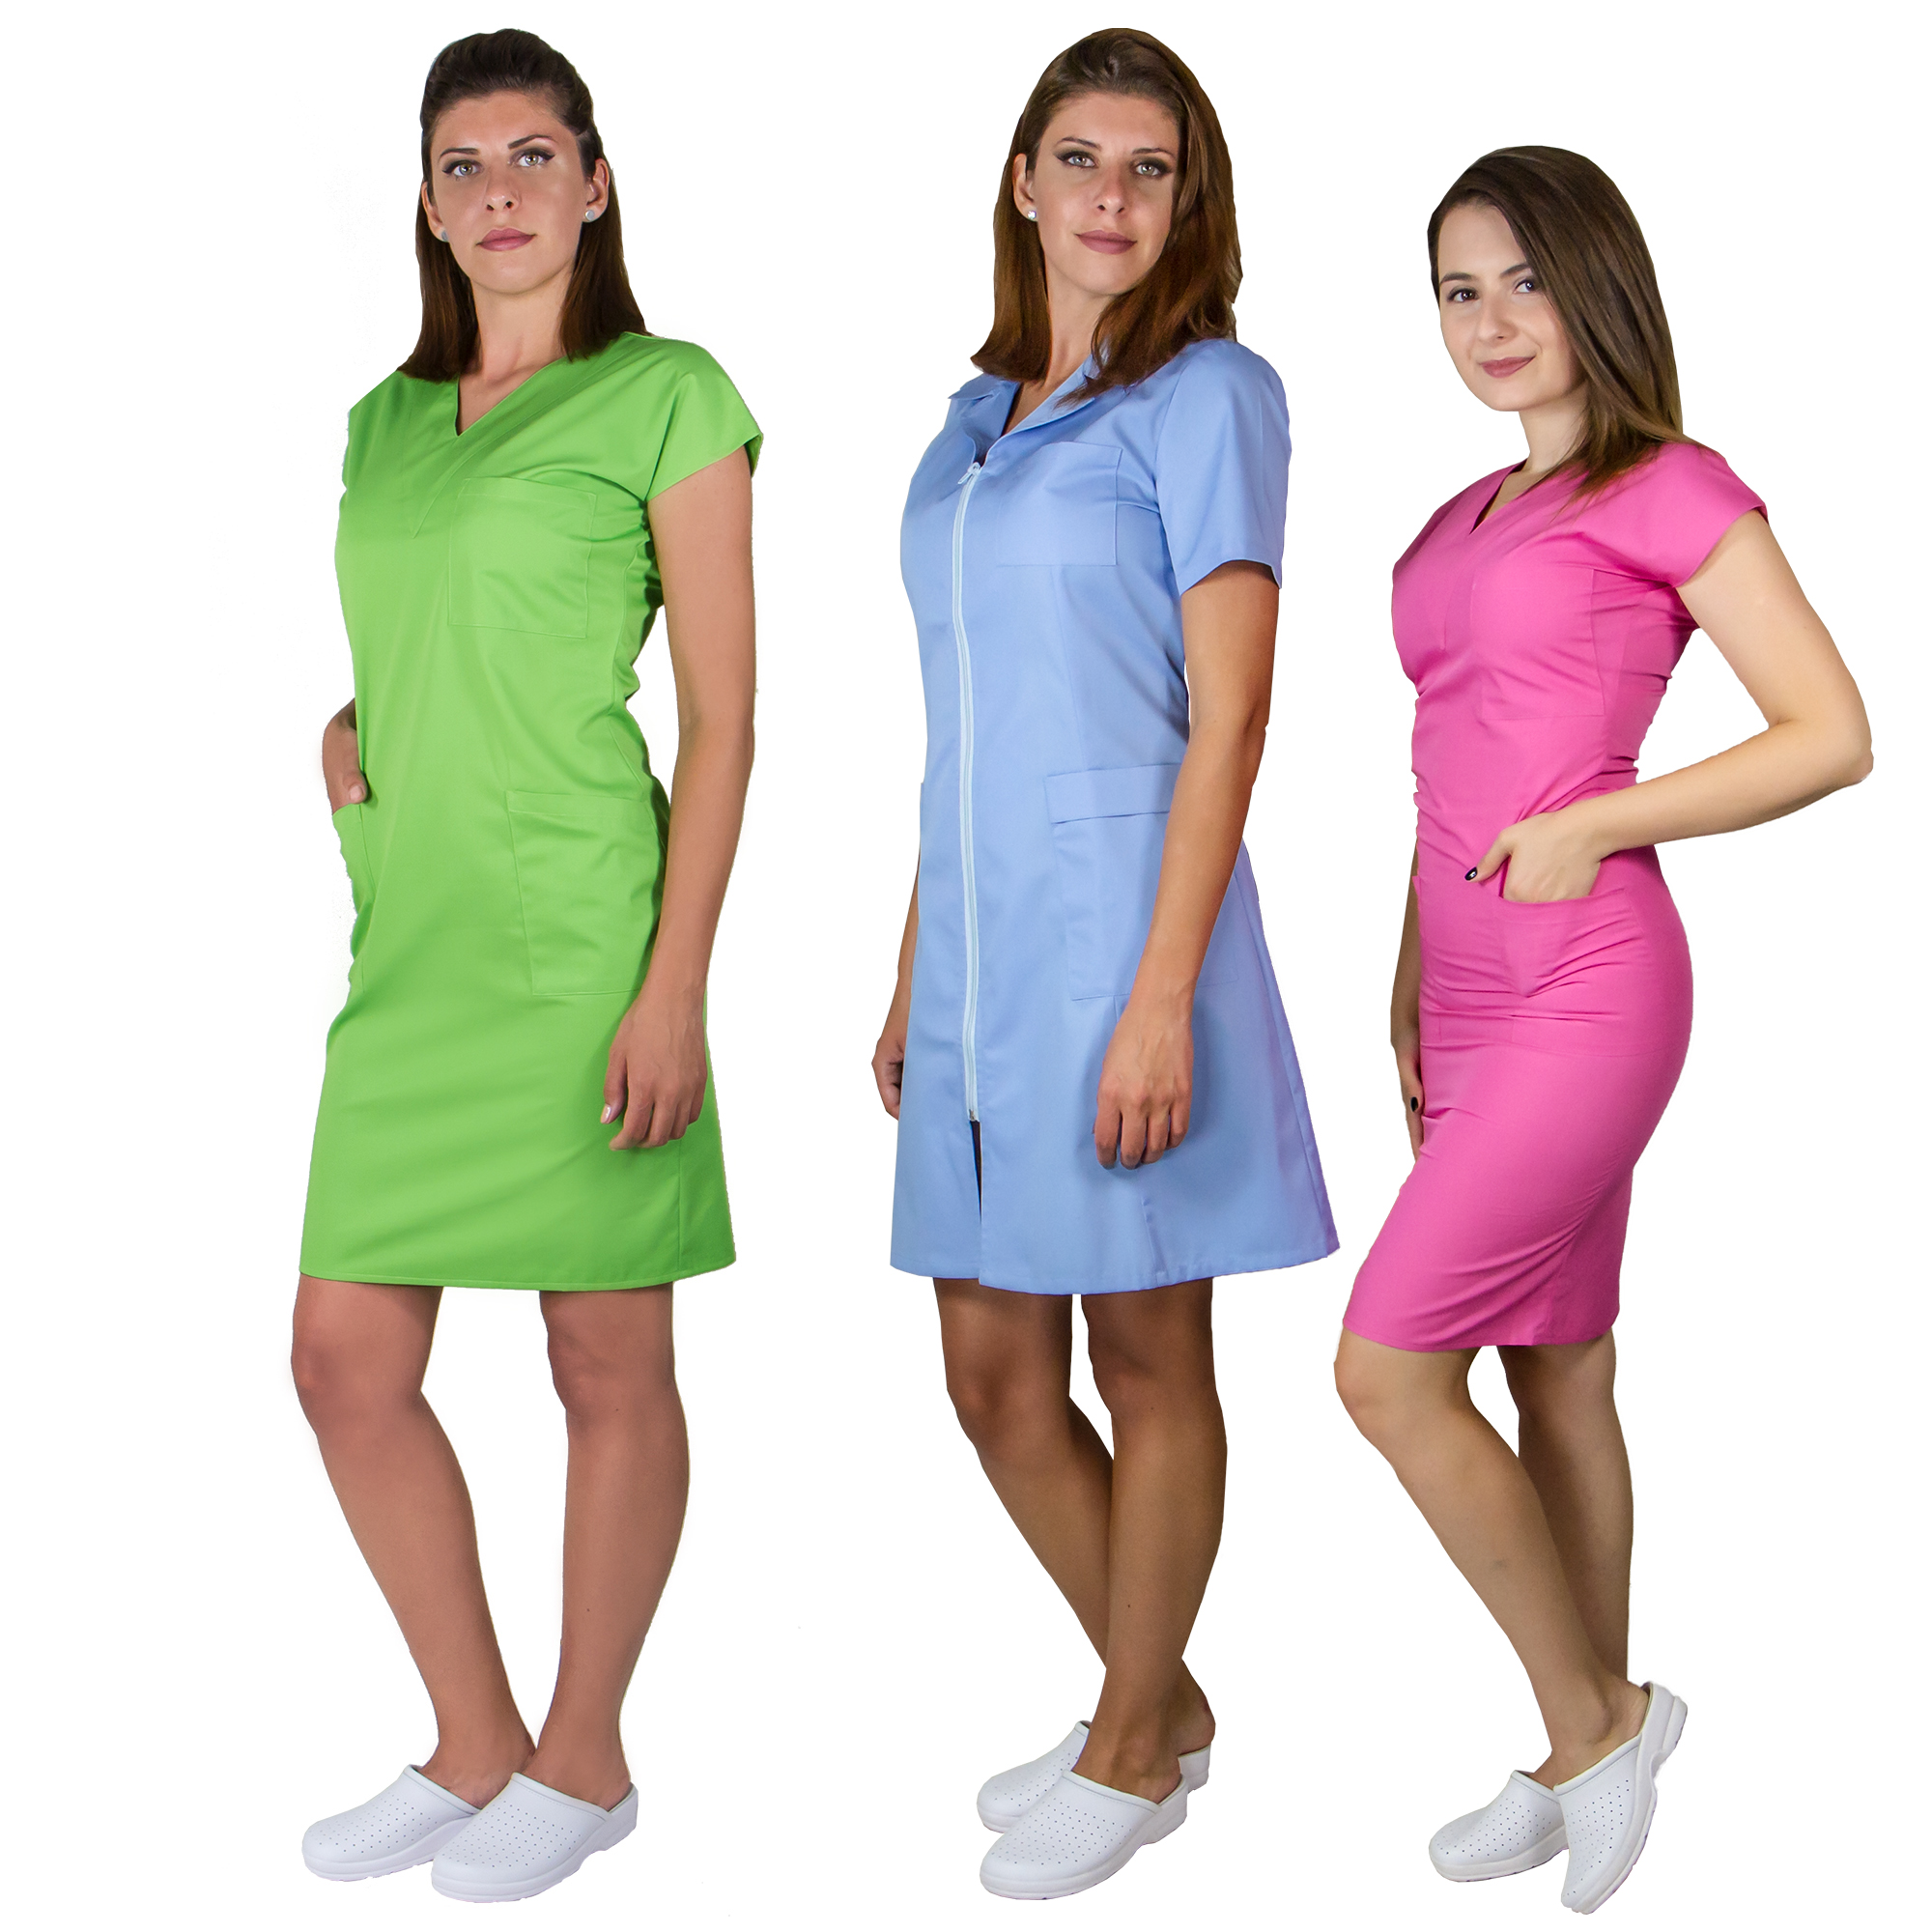 Work Uniforms/PROFESSIONAL UNIFORMS/Medical Dresses